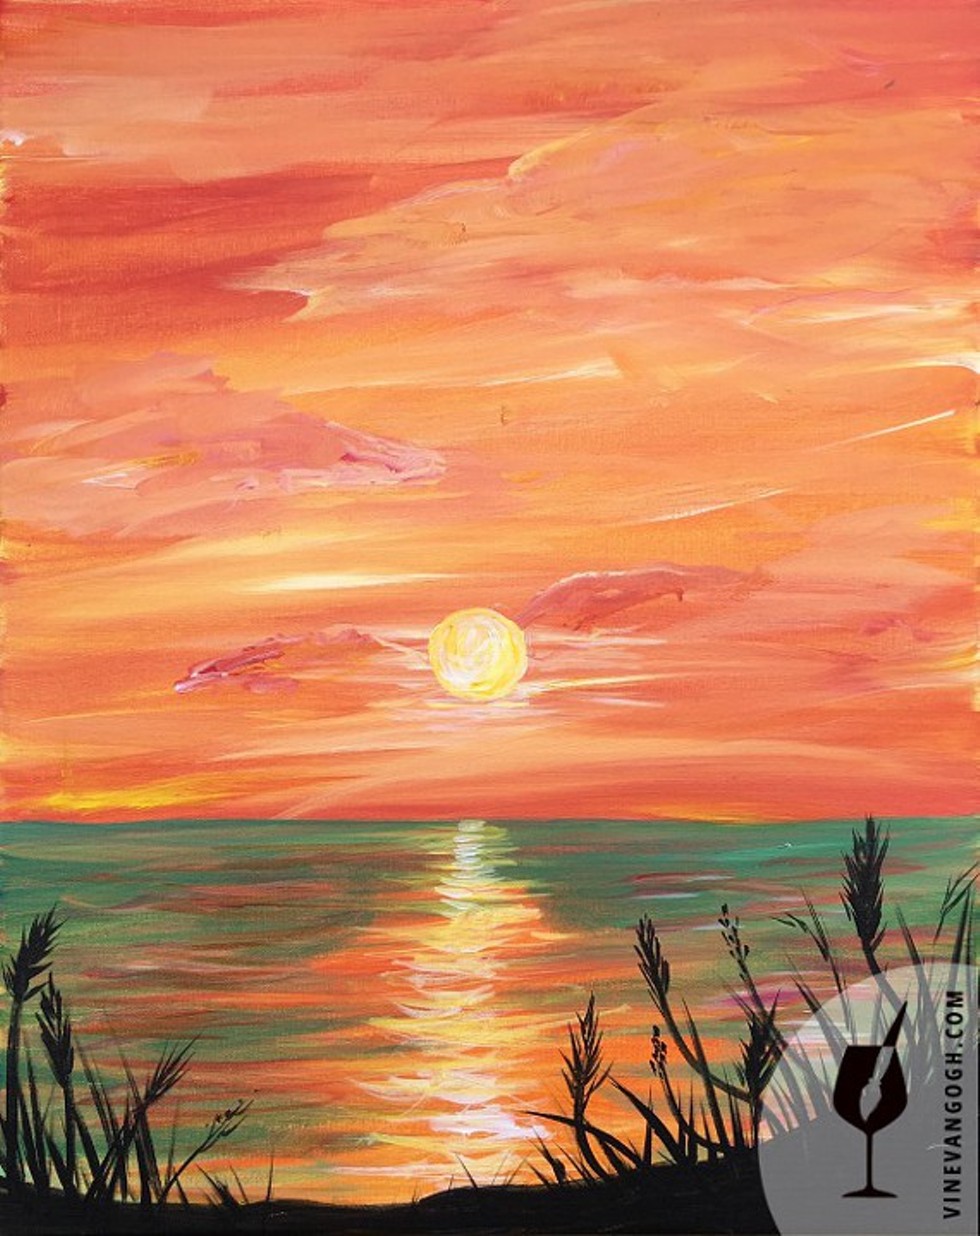 a2a94997_sunset_at_the_seashore-easy-_deirdra_wm.jpg